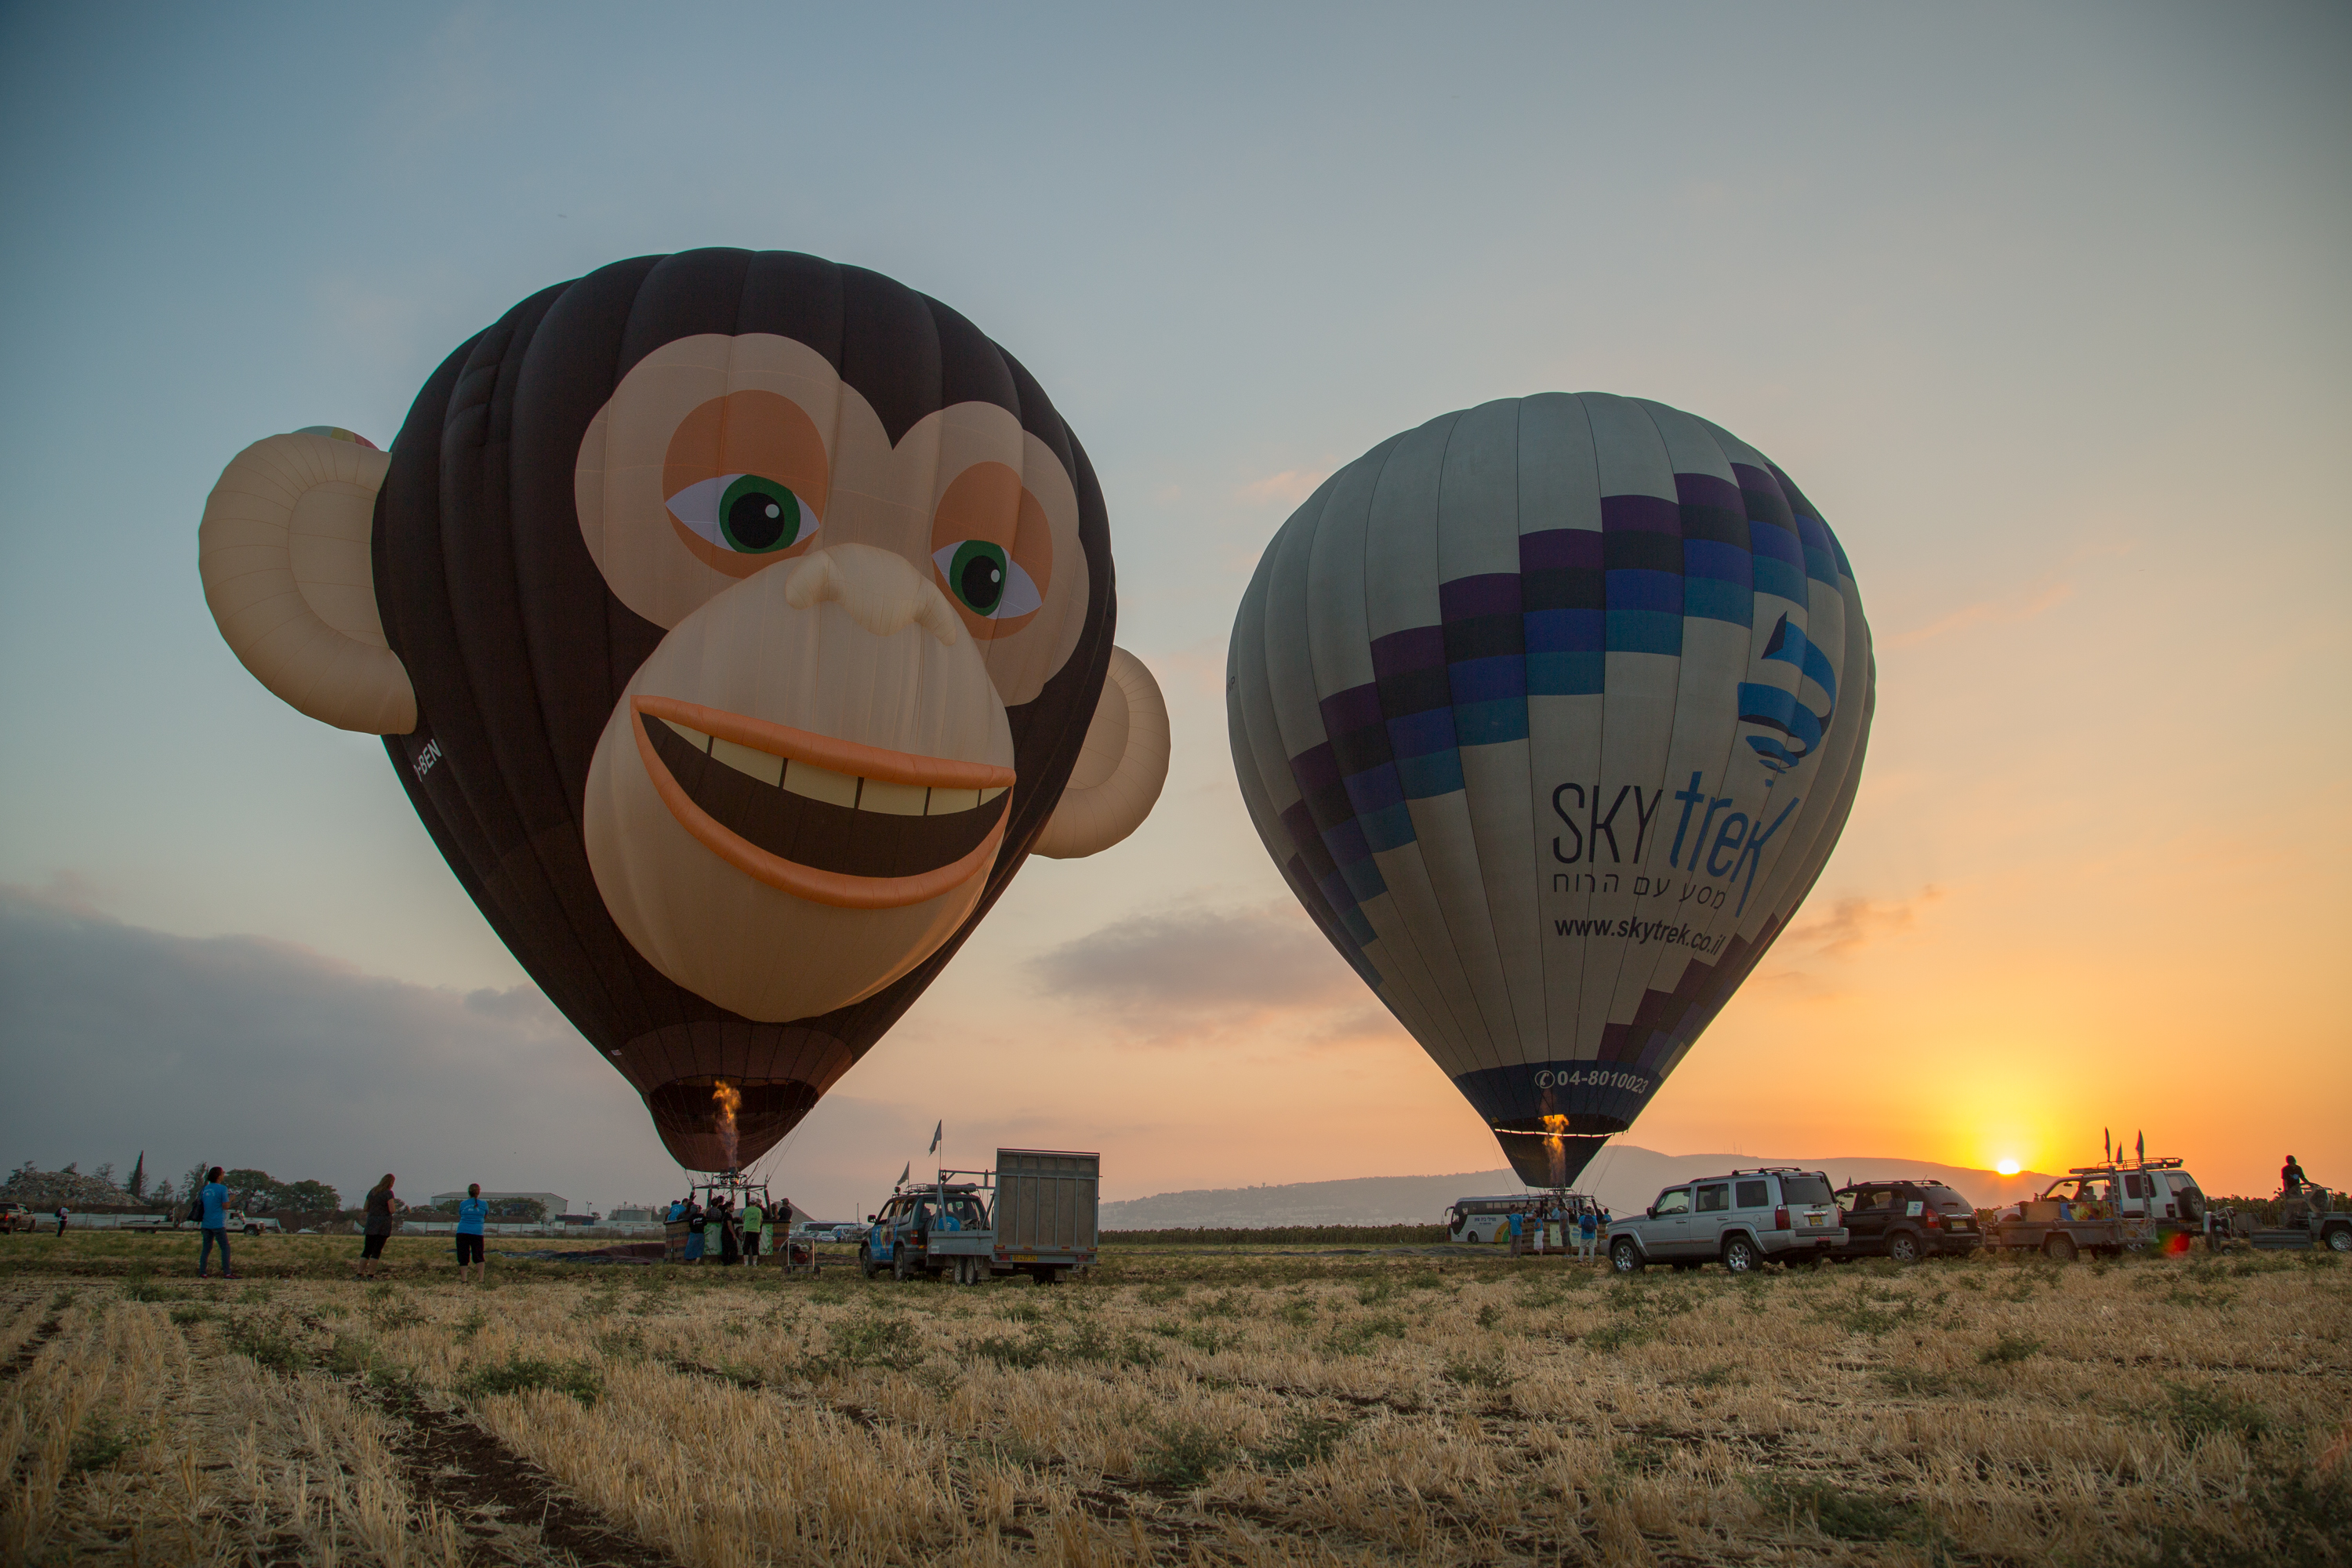 Hot-air Ballon festival in Eshkol National Park (Photo: Skytrek hot-air ballons)